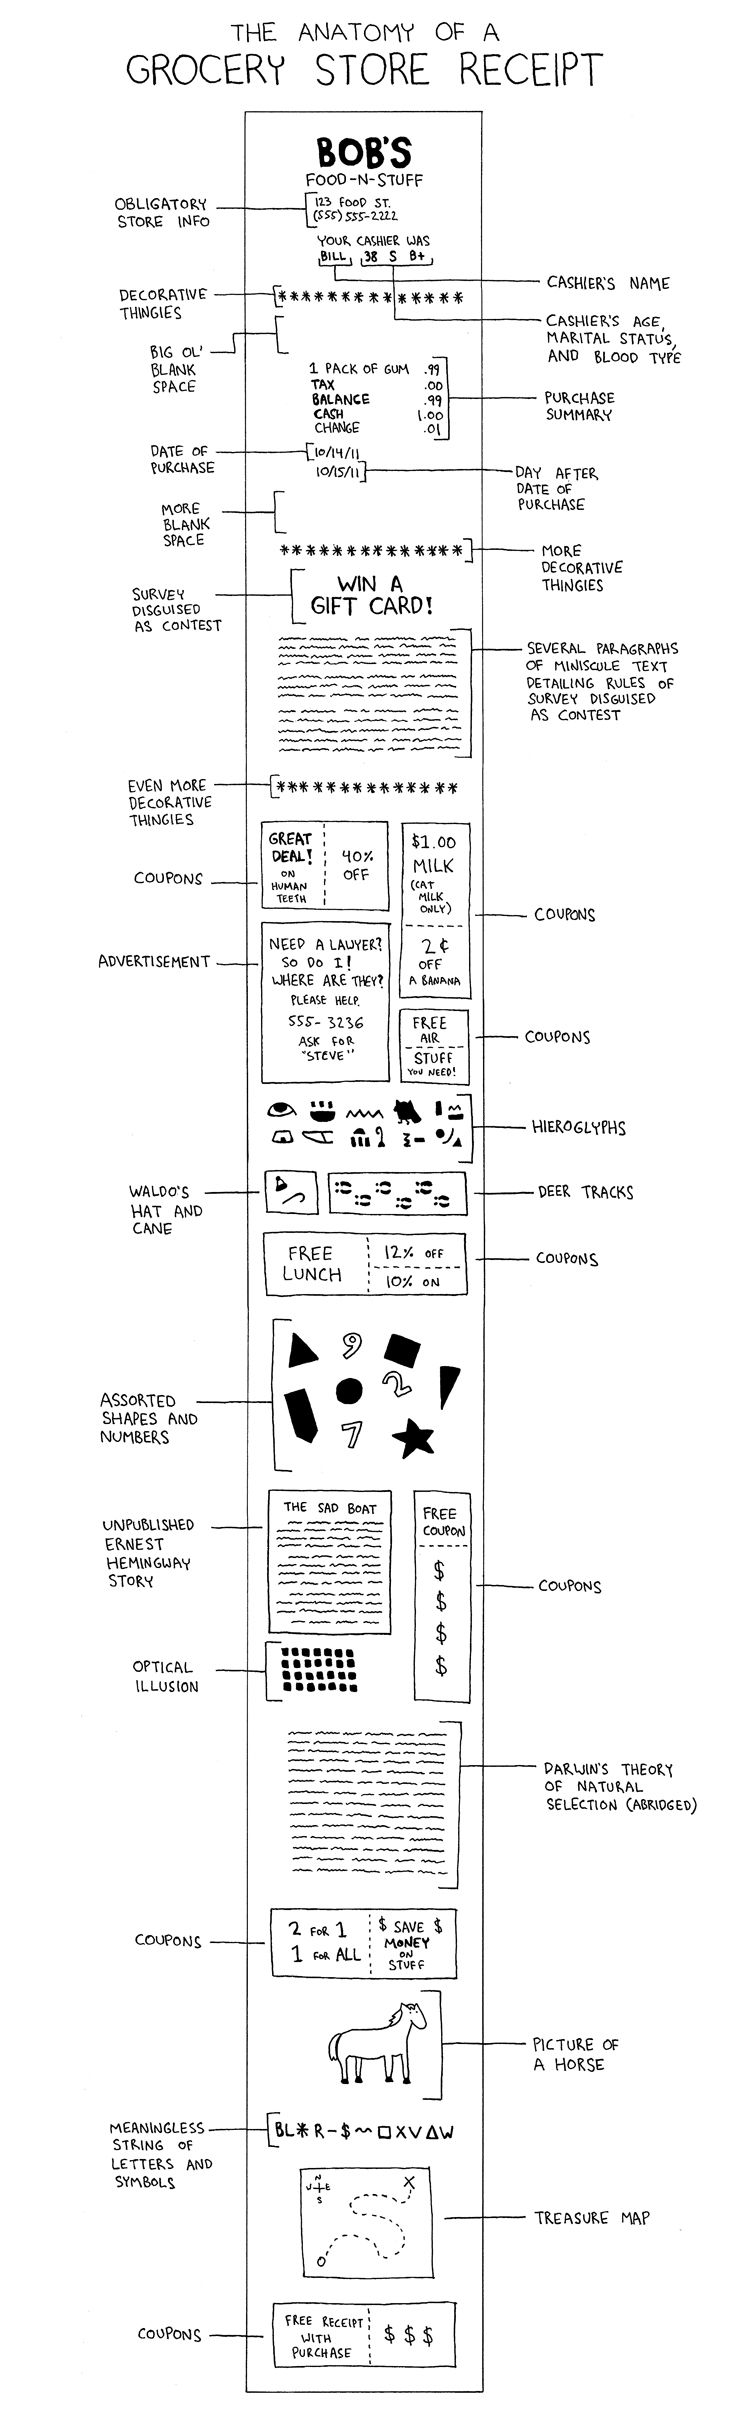 Anatomy of a grocery store receipt.